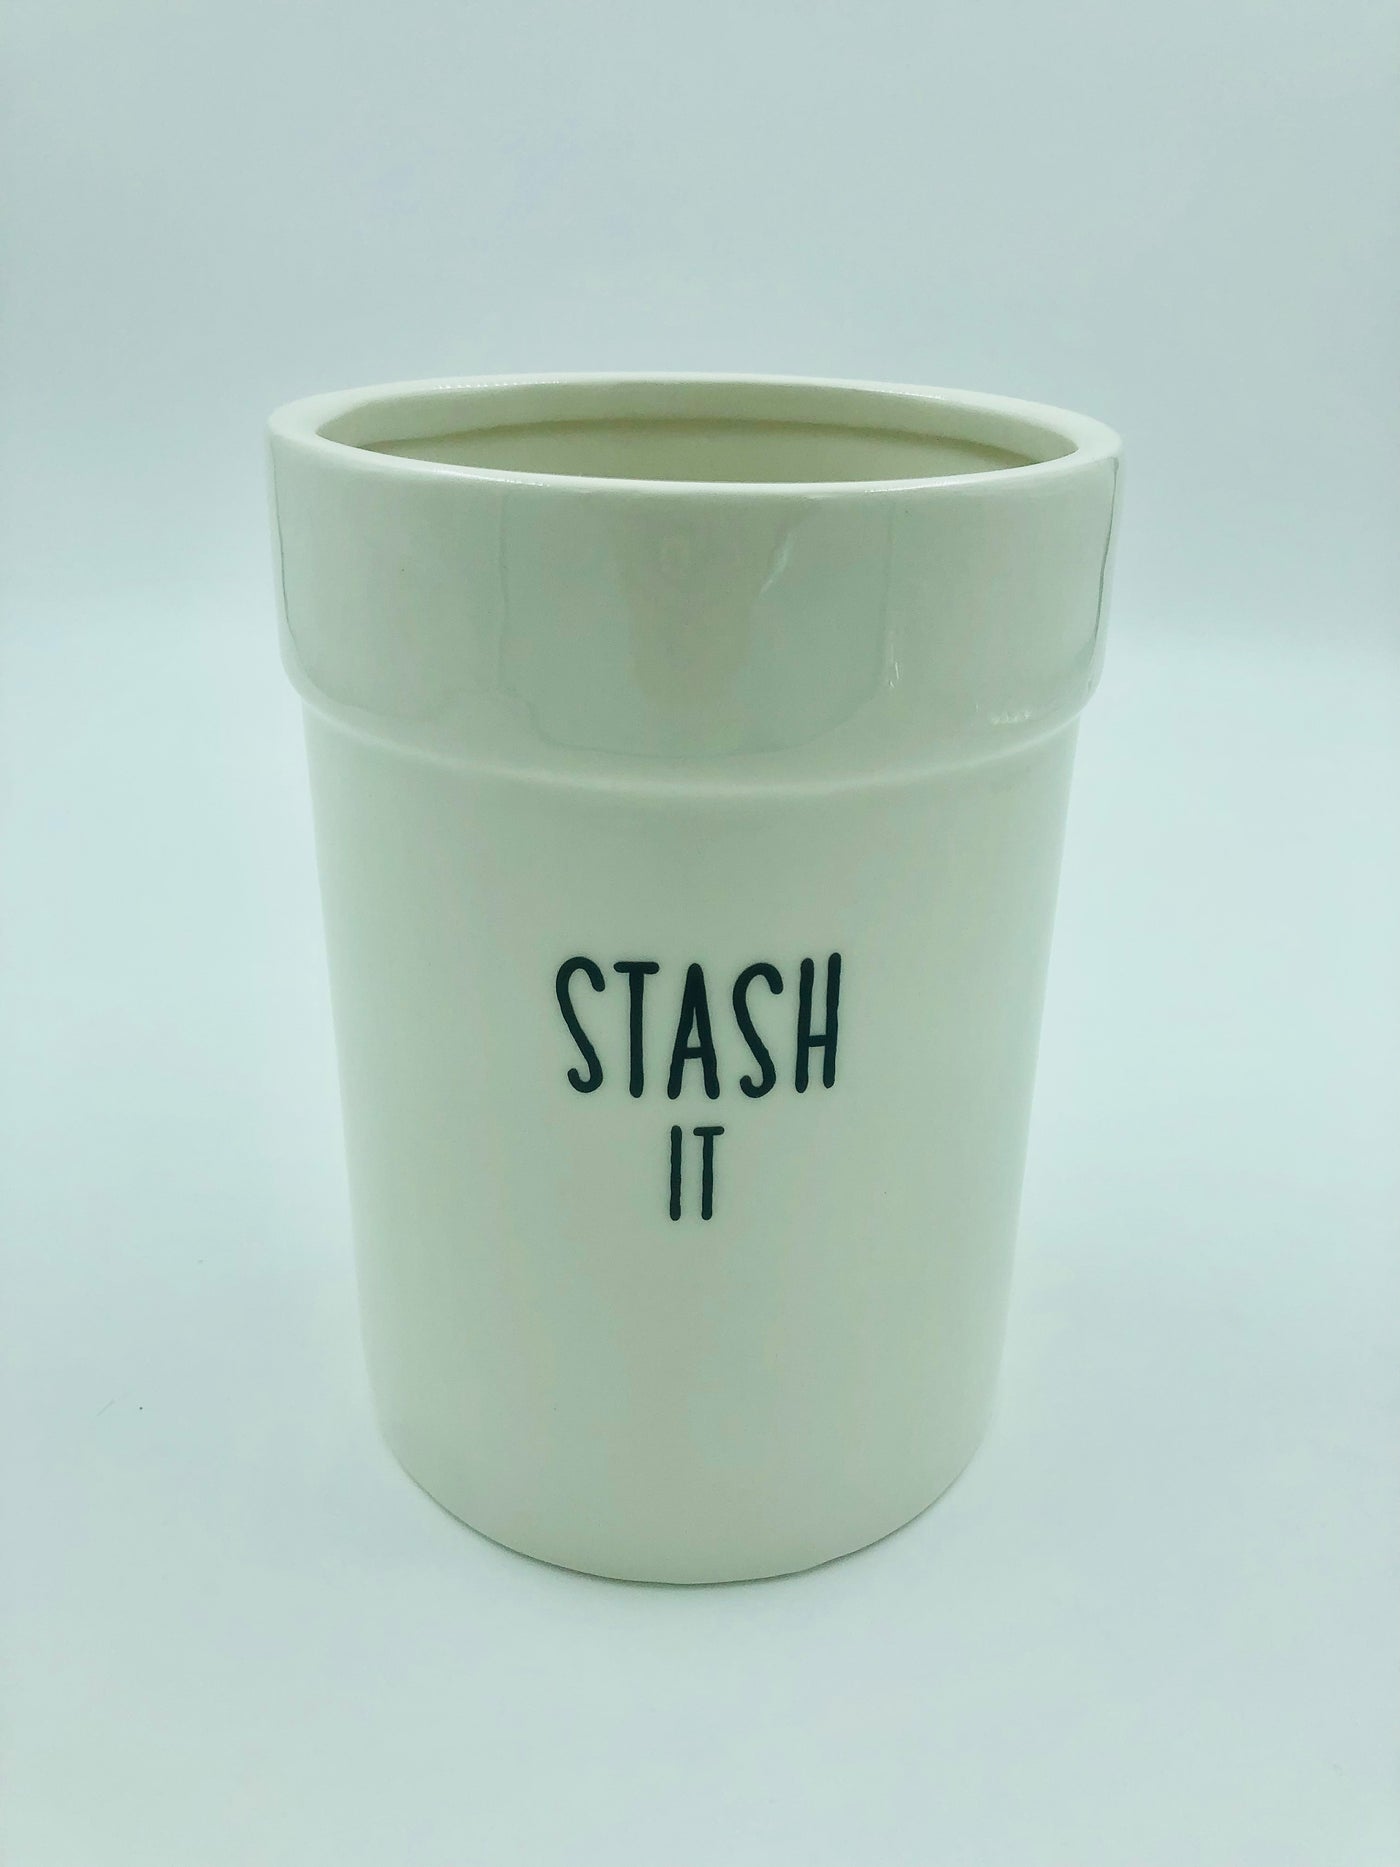 Stash It container by Mandii Vee